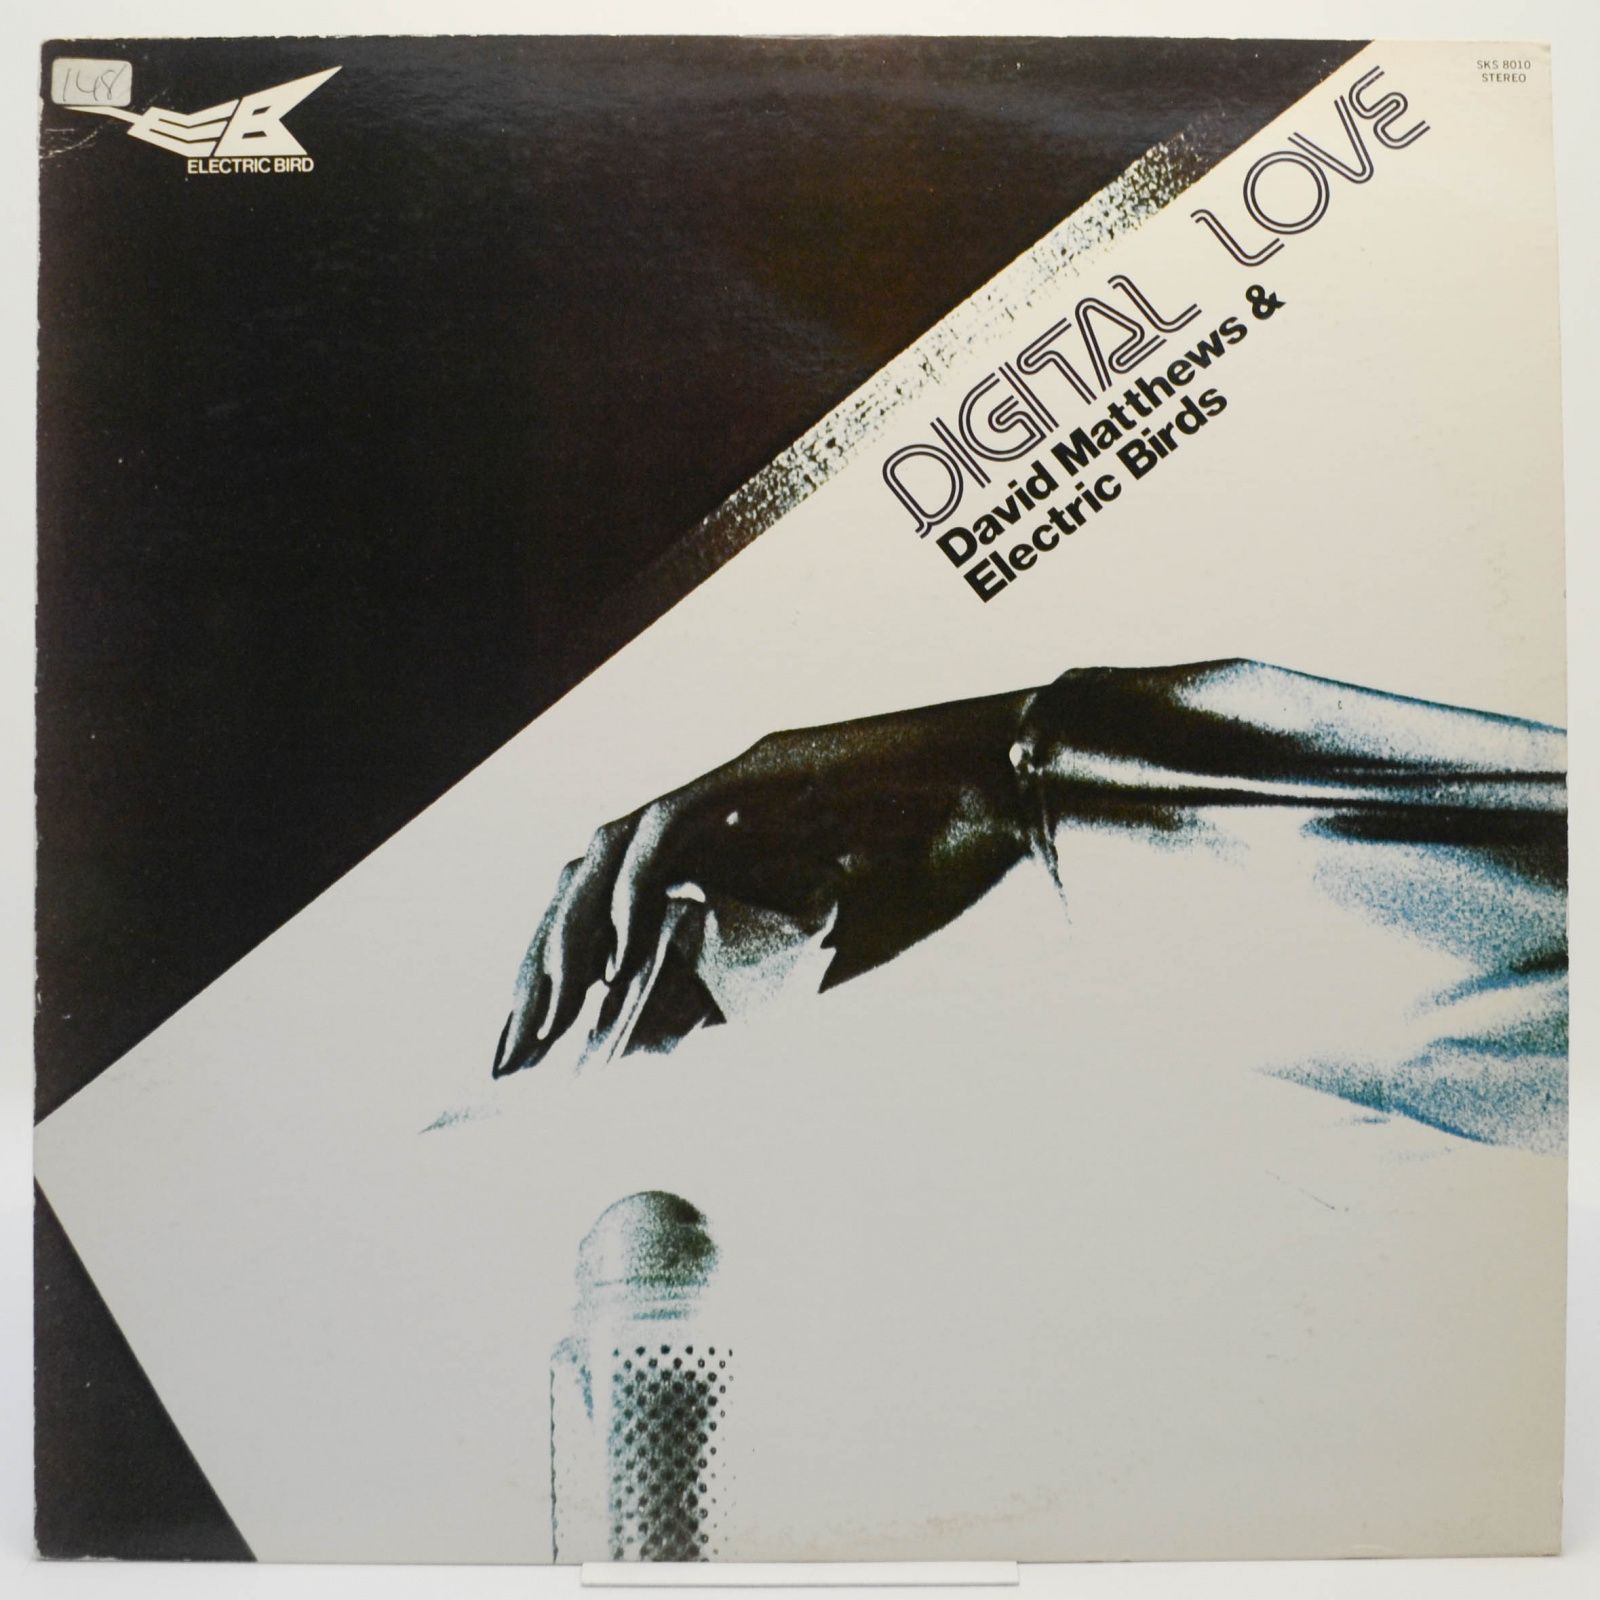 David Matthews & Electric Birds — Digital Love, 1979